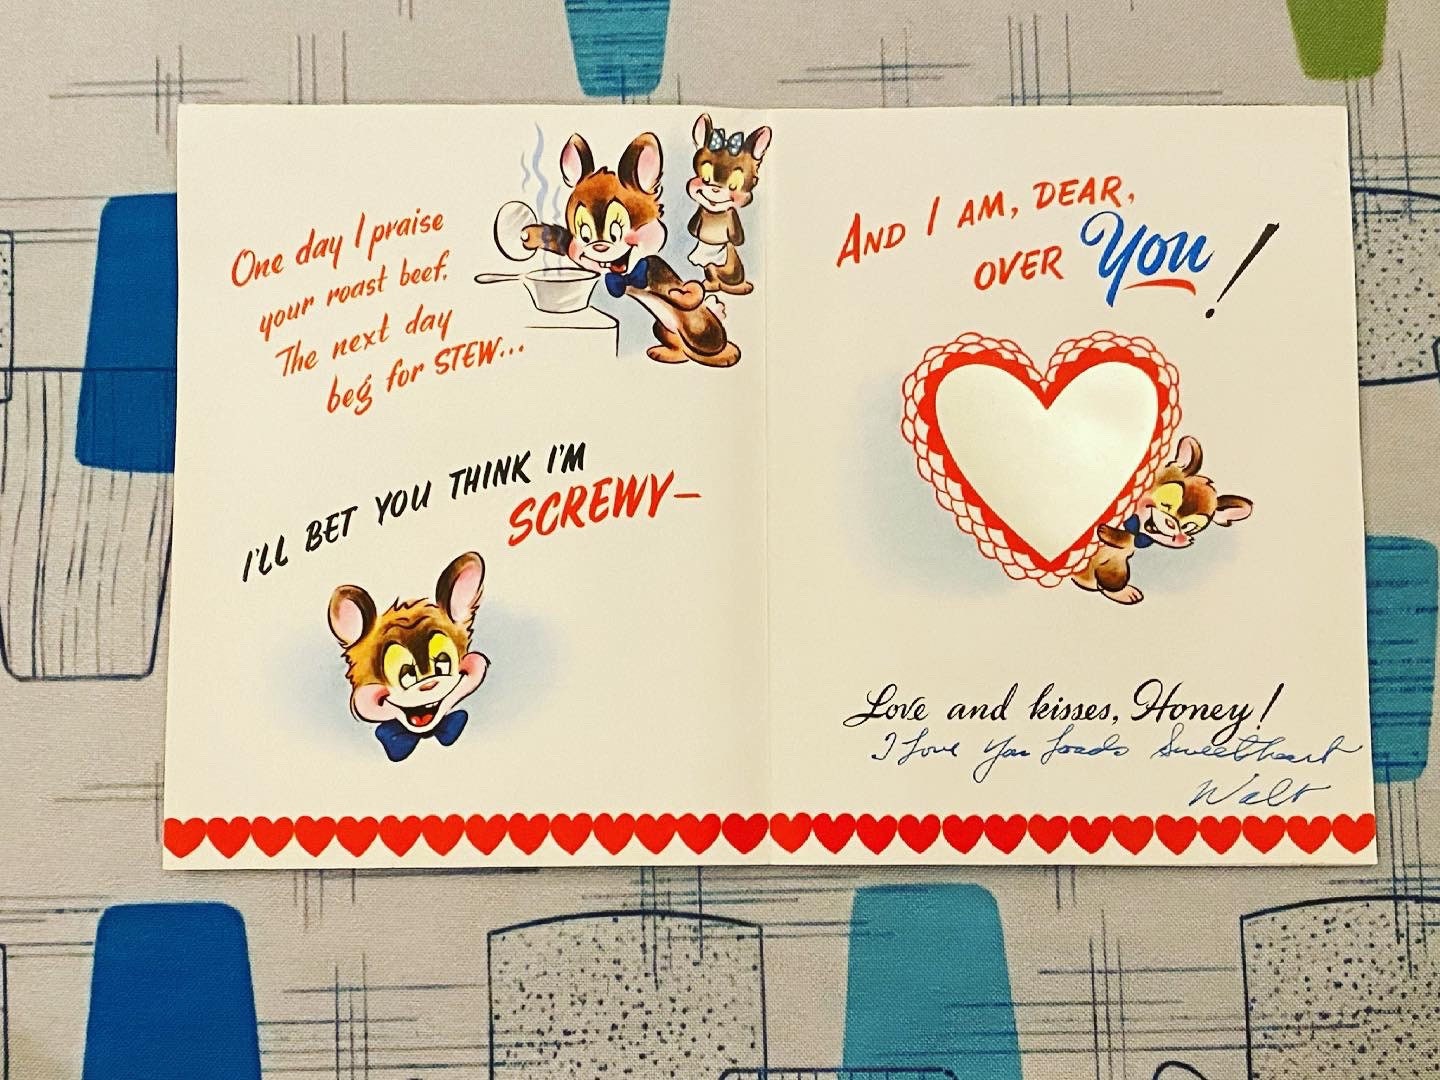 Your Choice of a Vintage Valentines Day Card Kitsch Ephemera